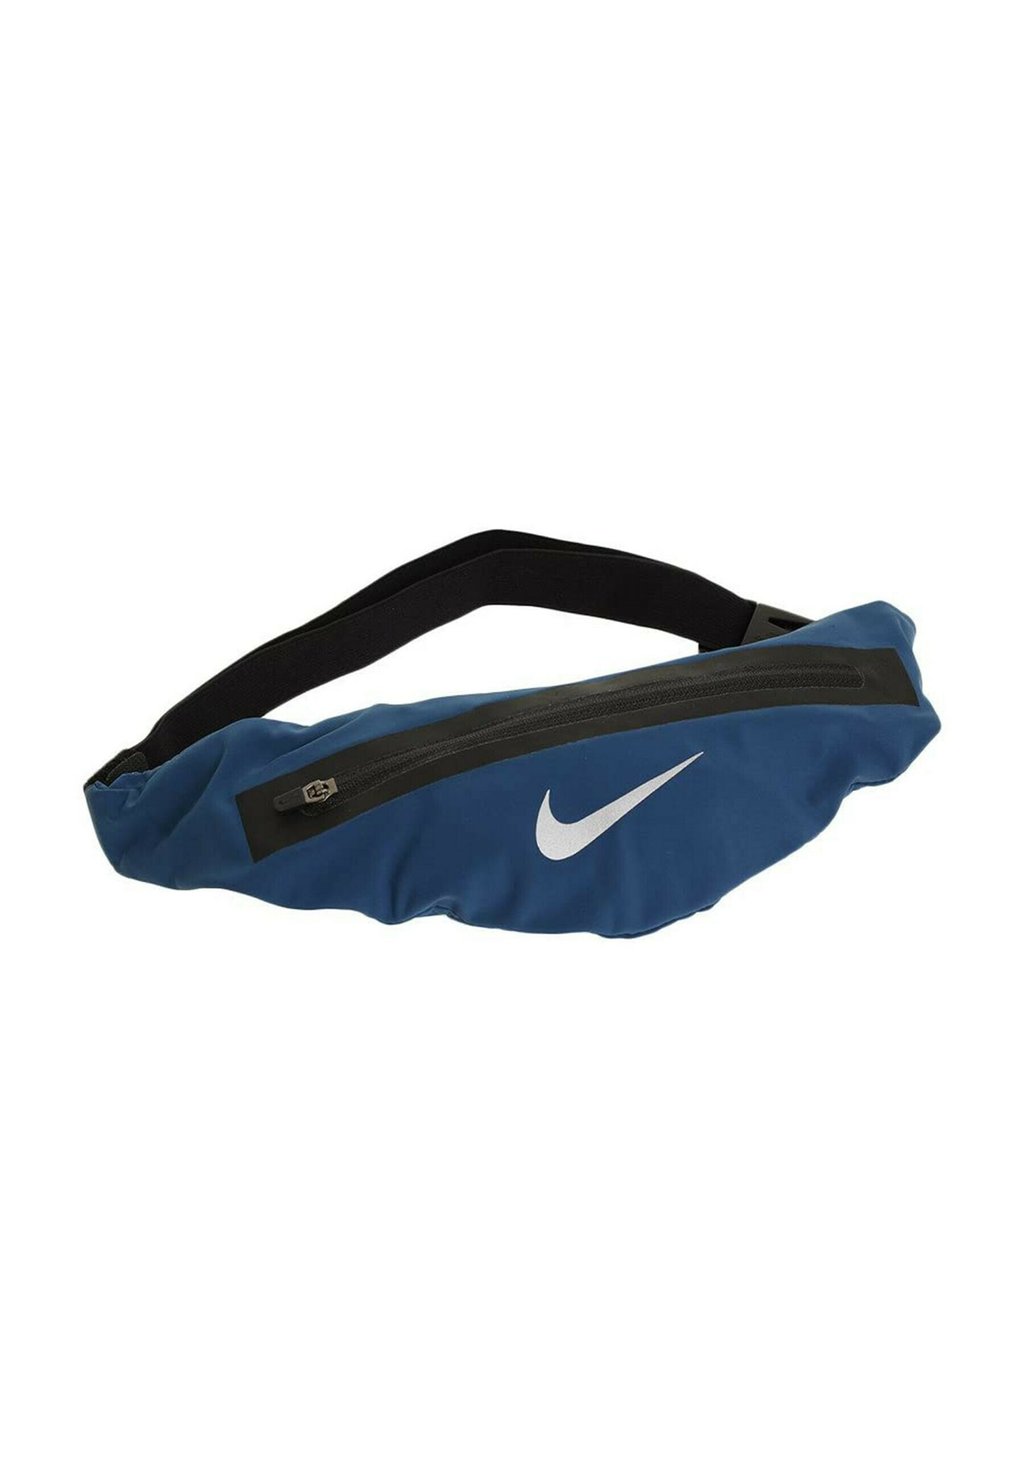 Поясная сумка Nike, темно-синяя сумка поясная global ta синяя